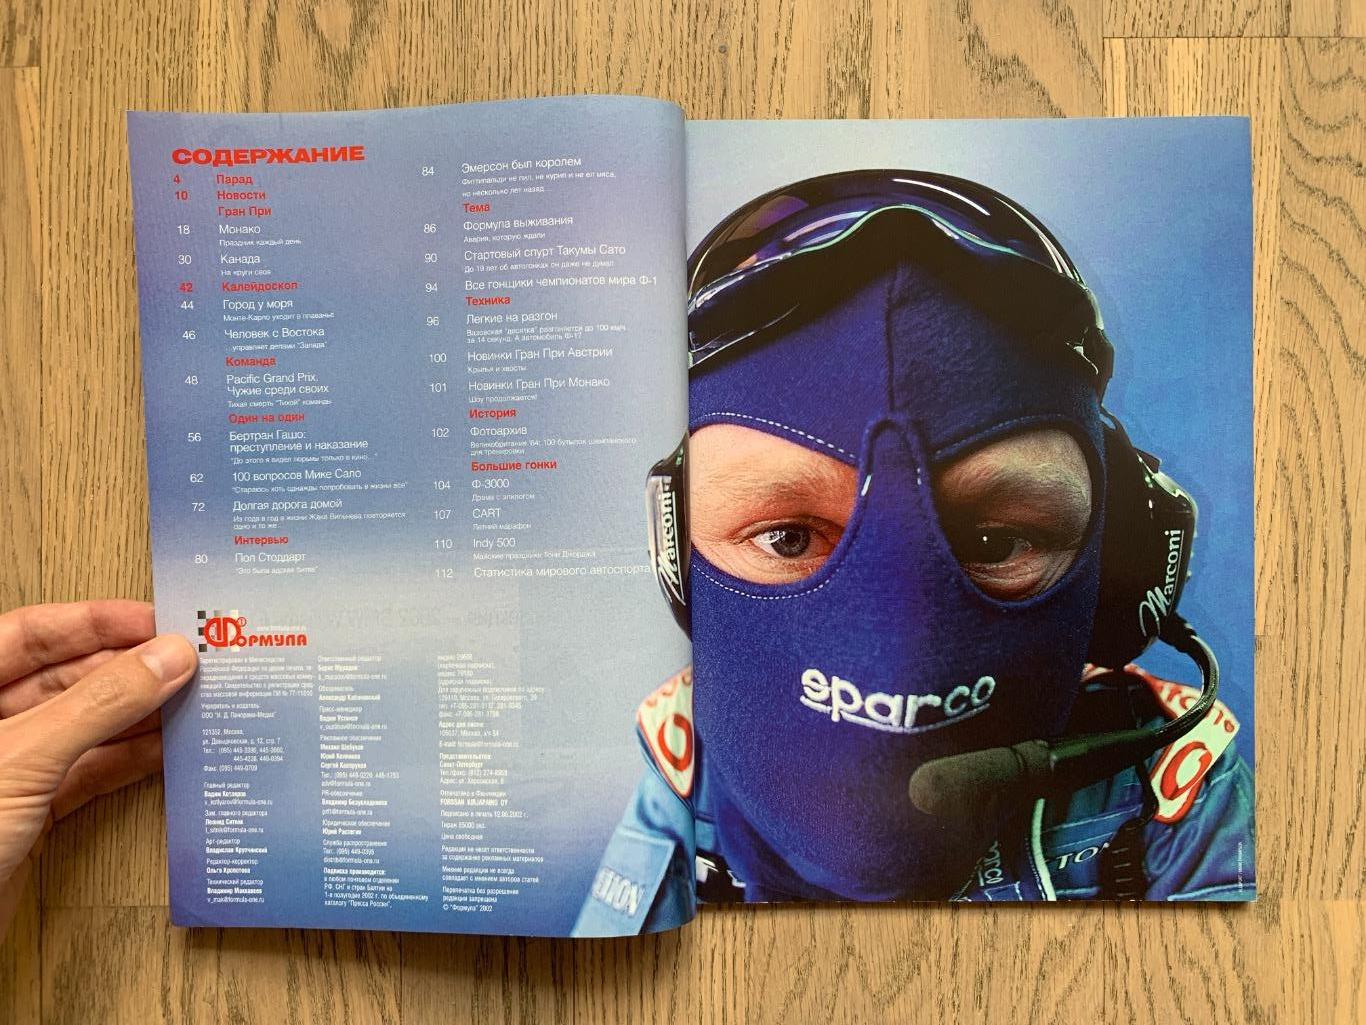 Журнал Формула 1 (Formula Magazine) / июль 2002 1